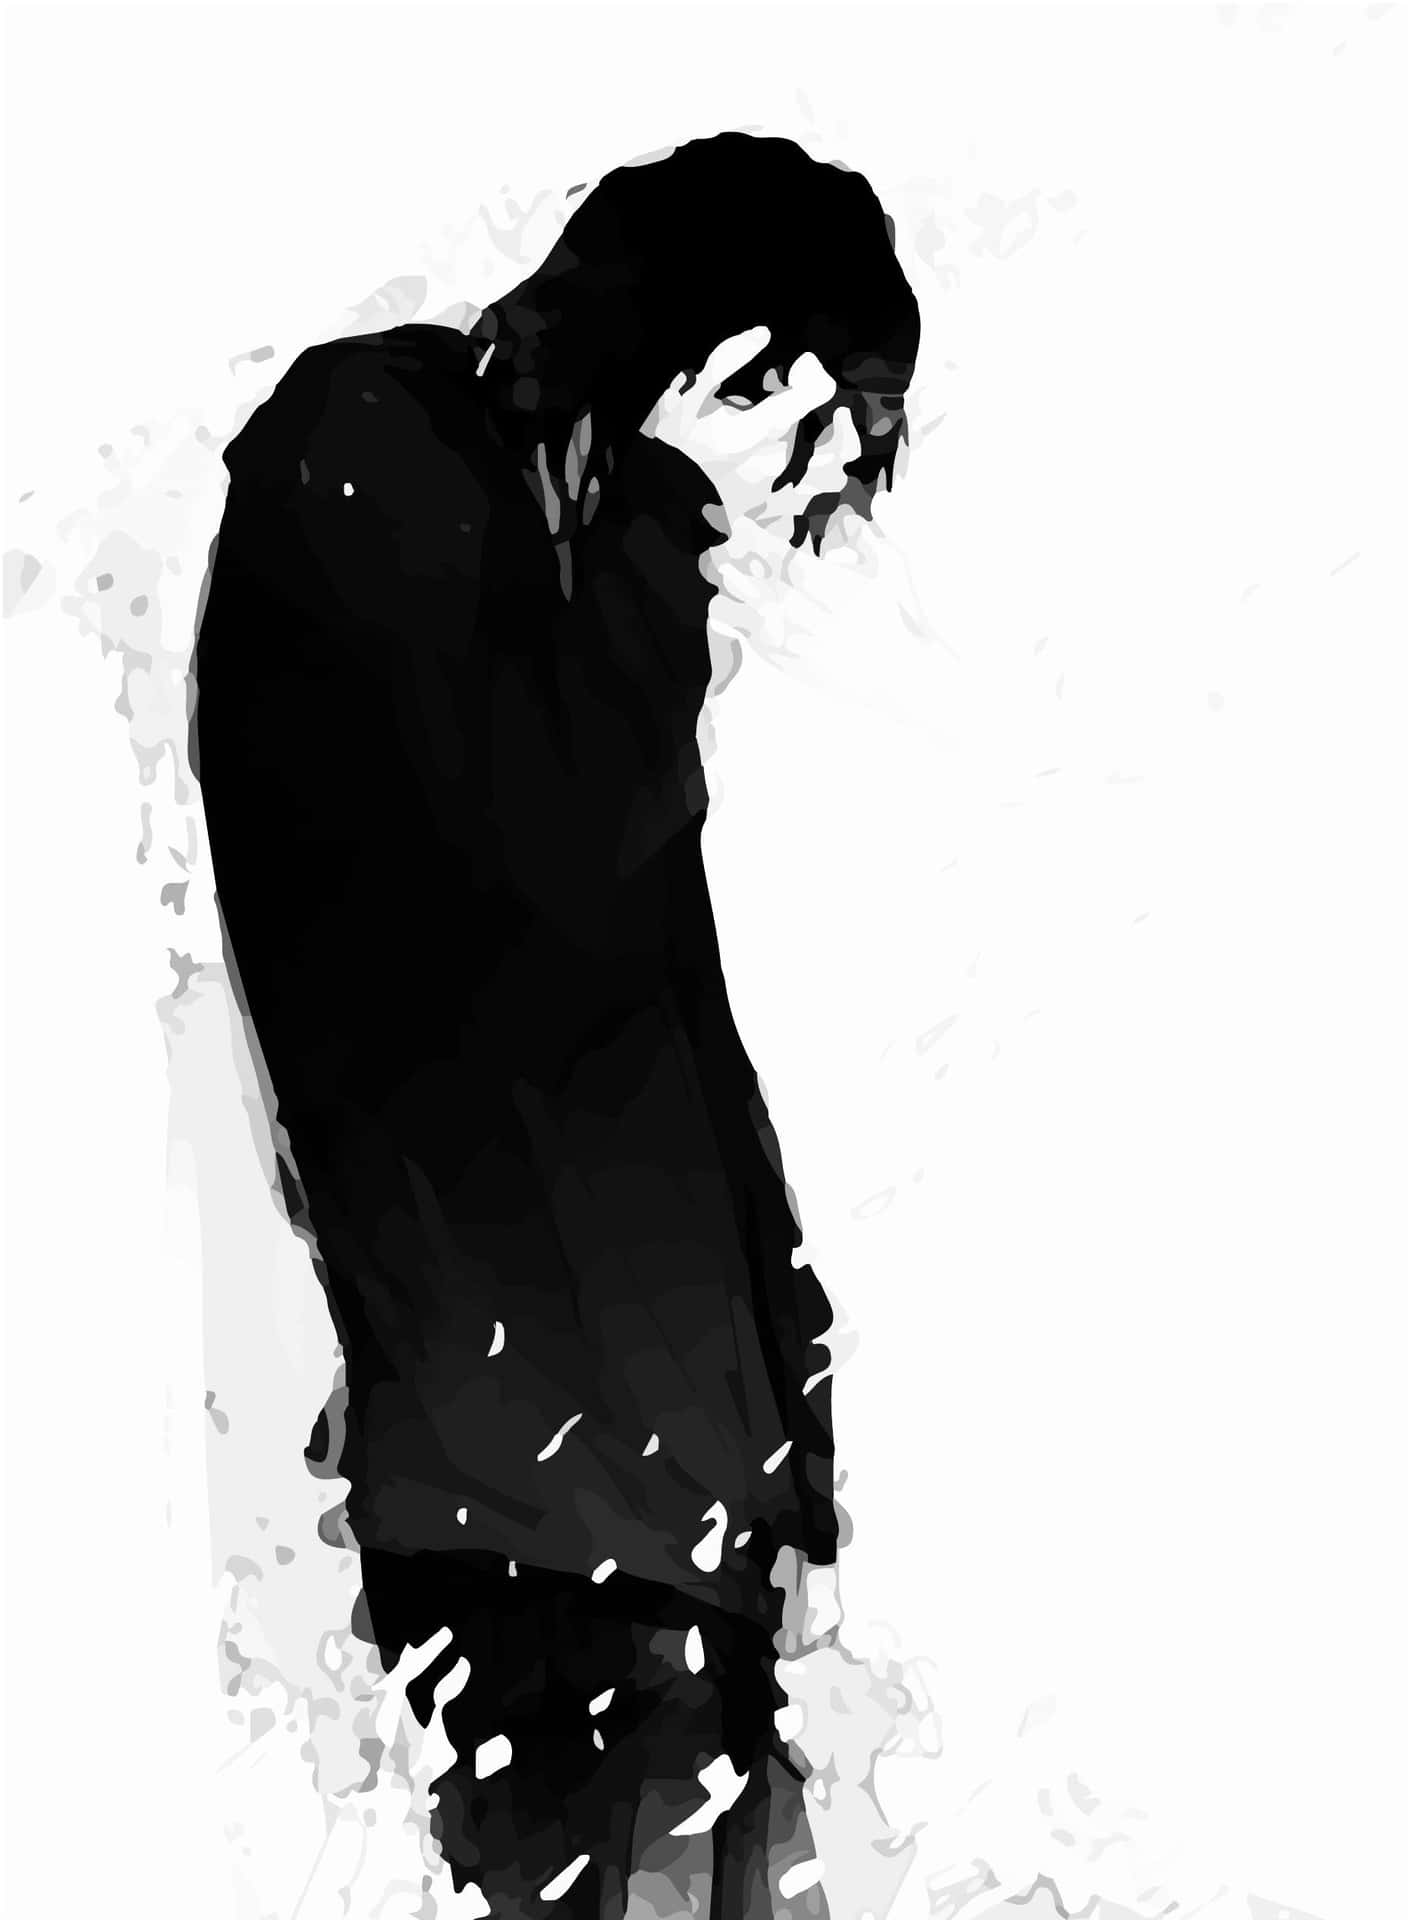 Sad Depressing Anime Boy Crying Alone Digital Art Wallpaper